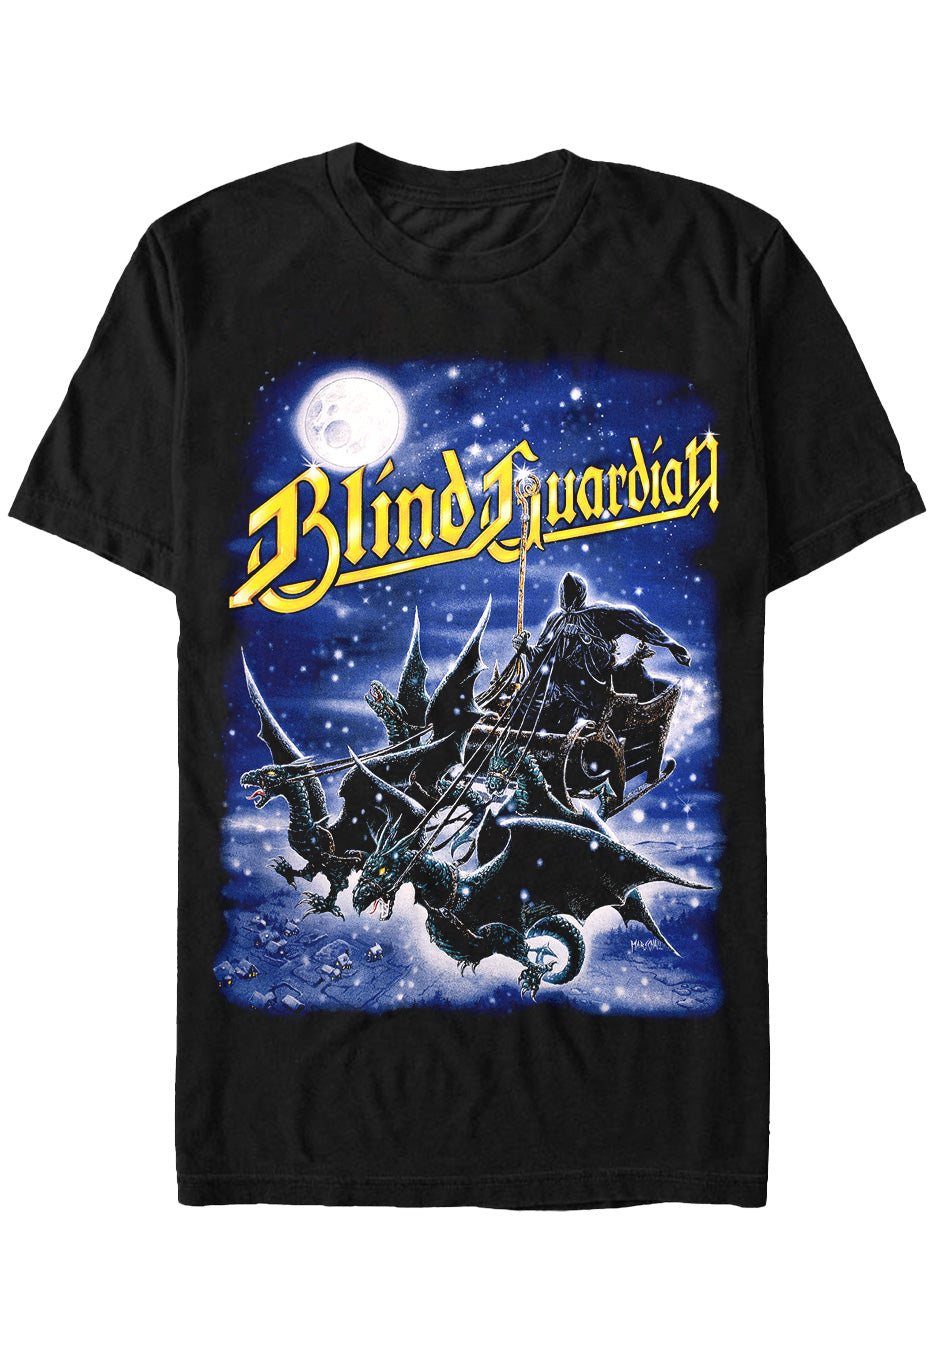 Blind Guardian - Christmas Guardian - T-Shirt